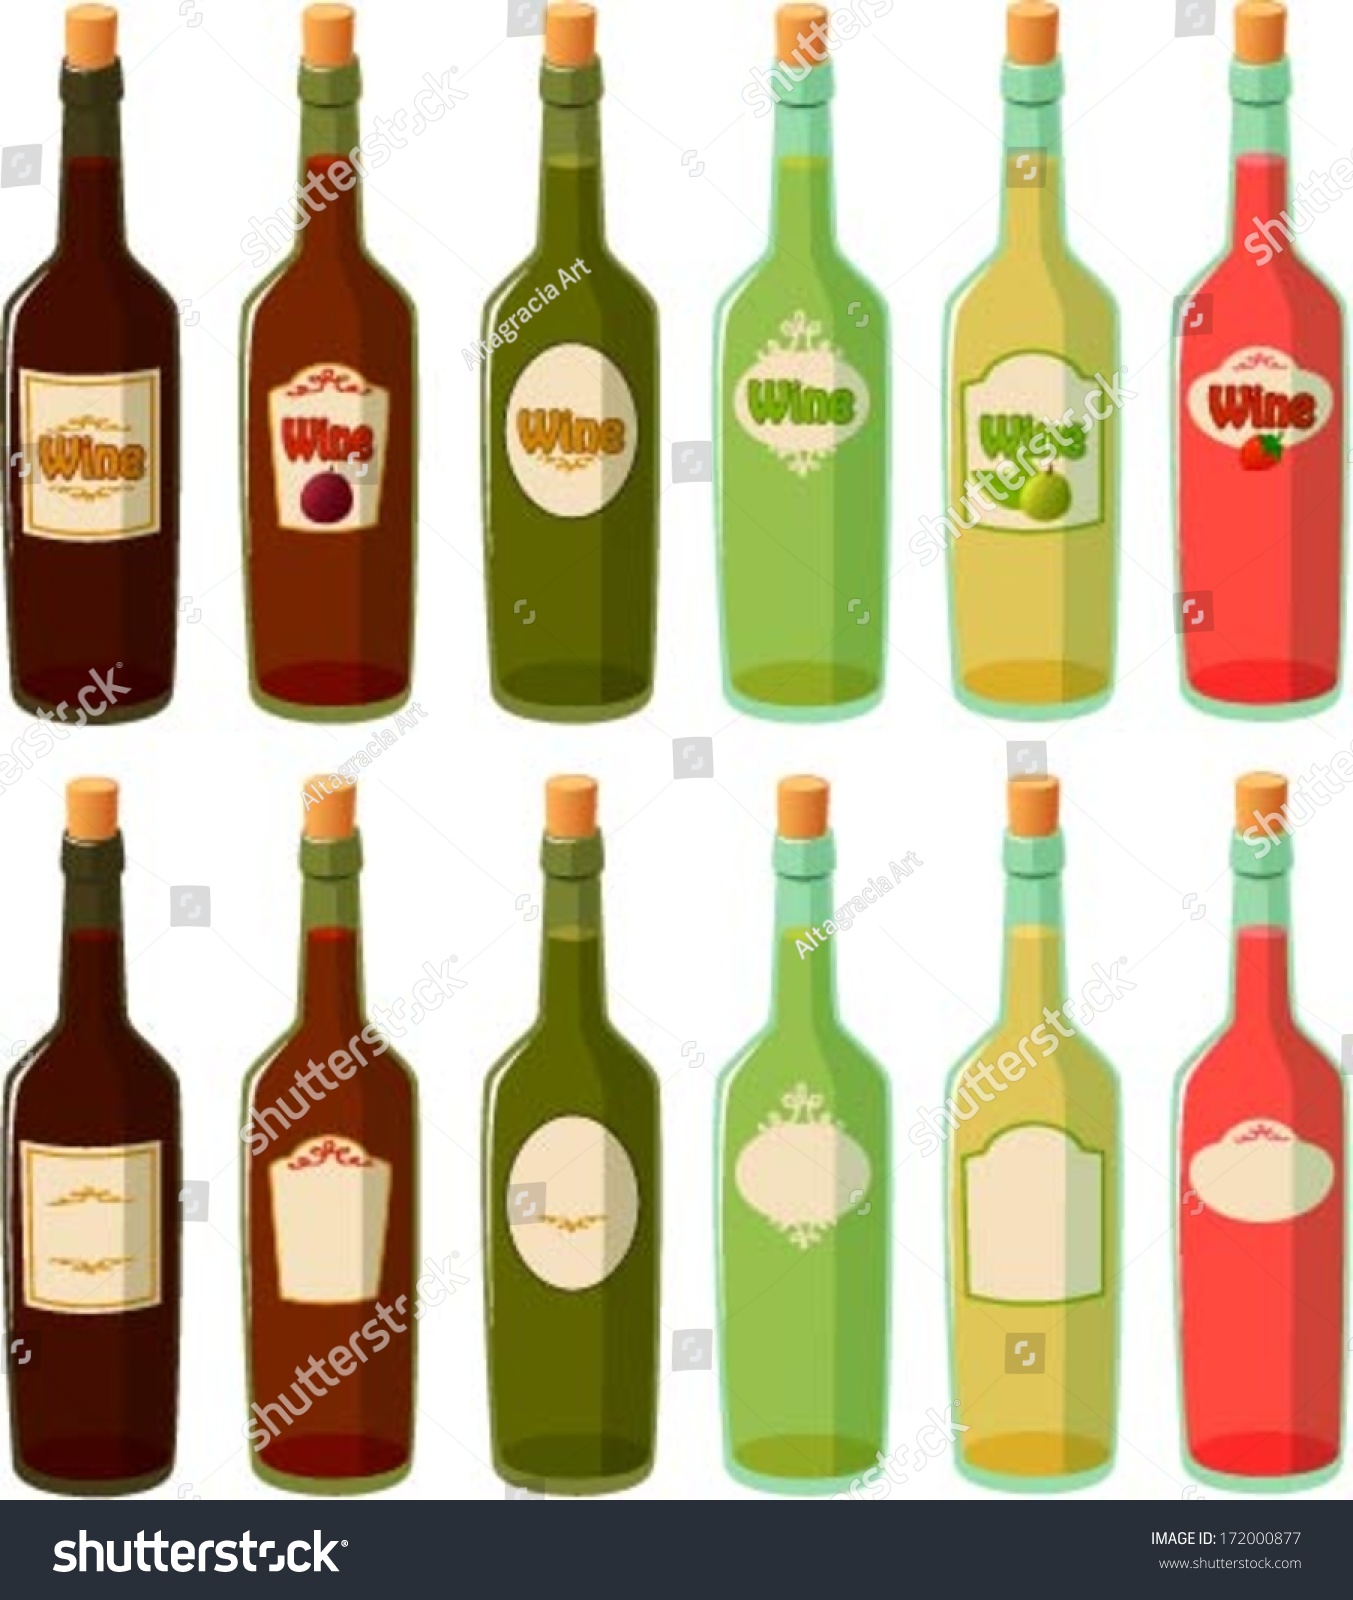 Vector illustration of various wine bottles. #172000877